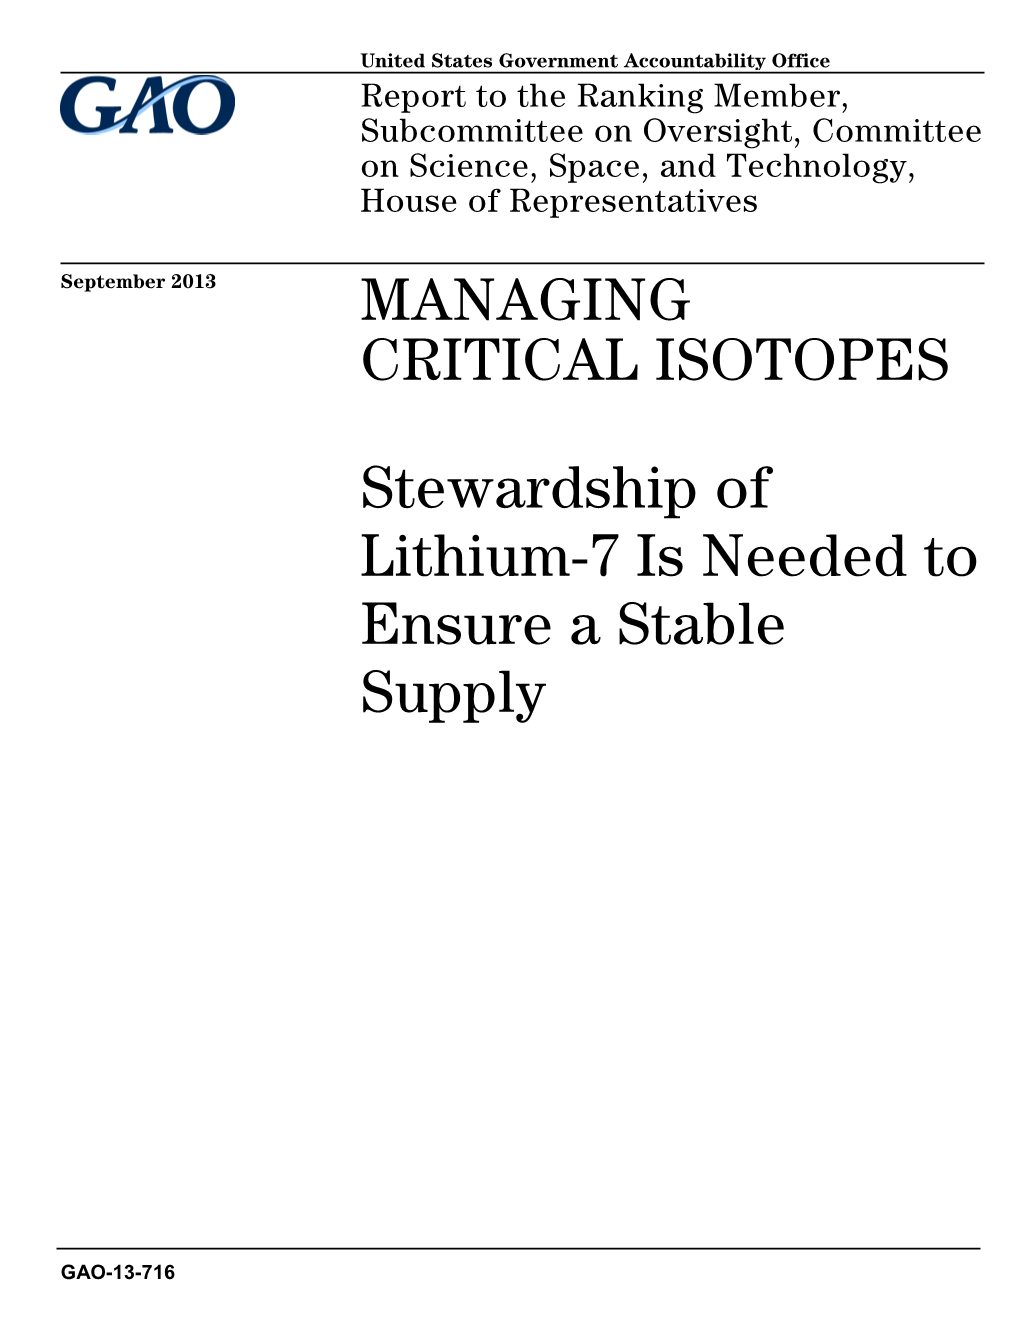 GAO-13-716, MANAGING CRITICAL ISOTOPES: Stewardship of Lithium